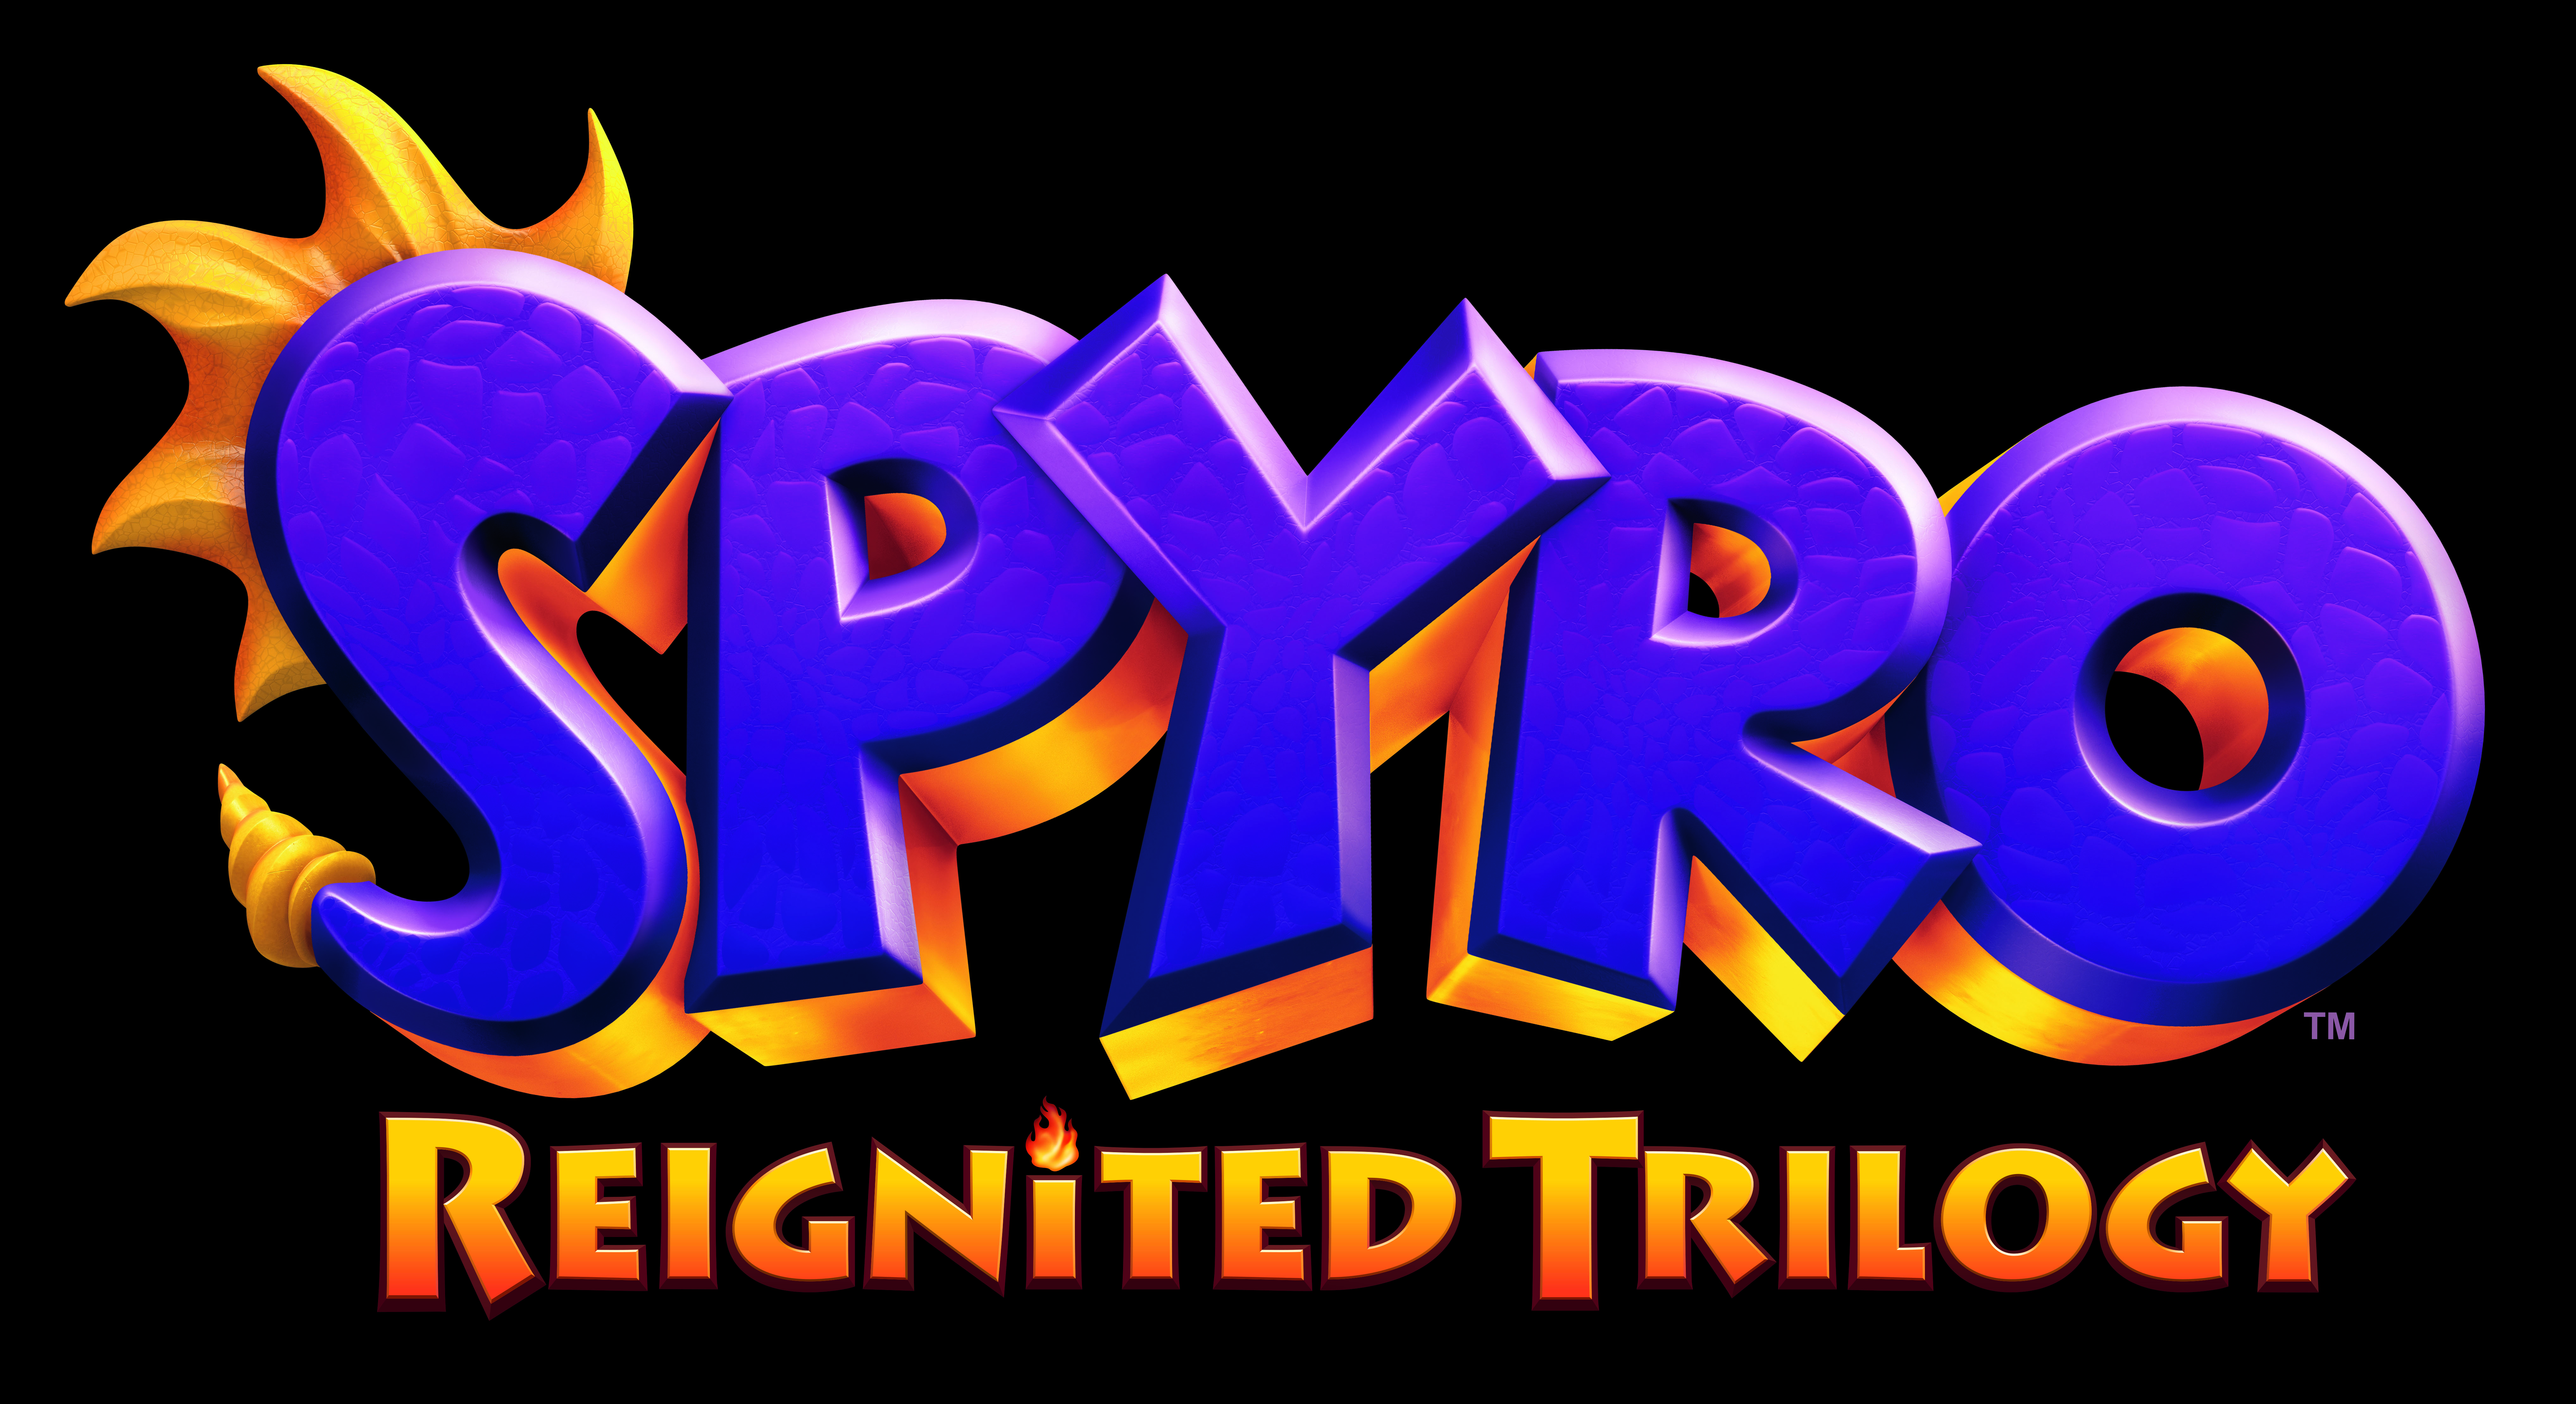 spyro the dragon logo